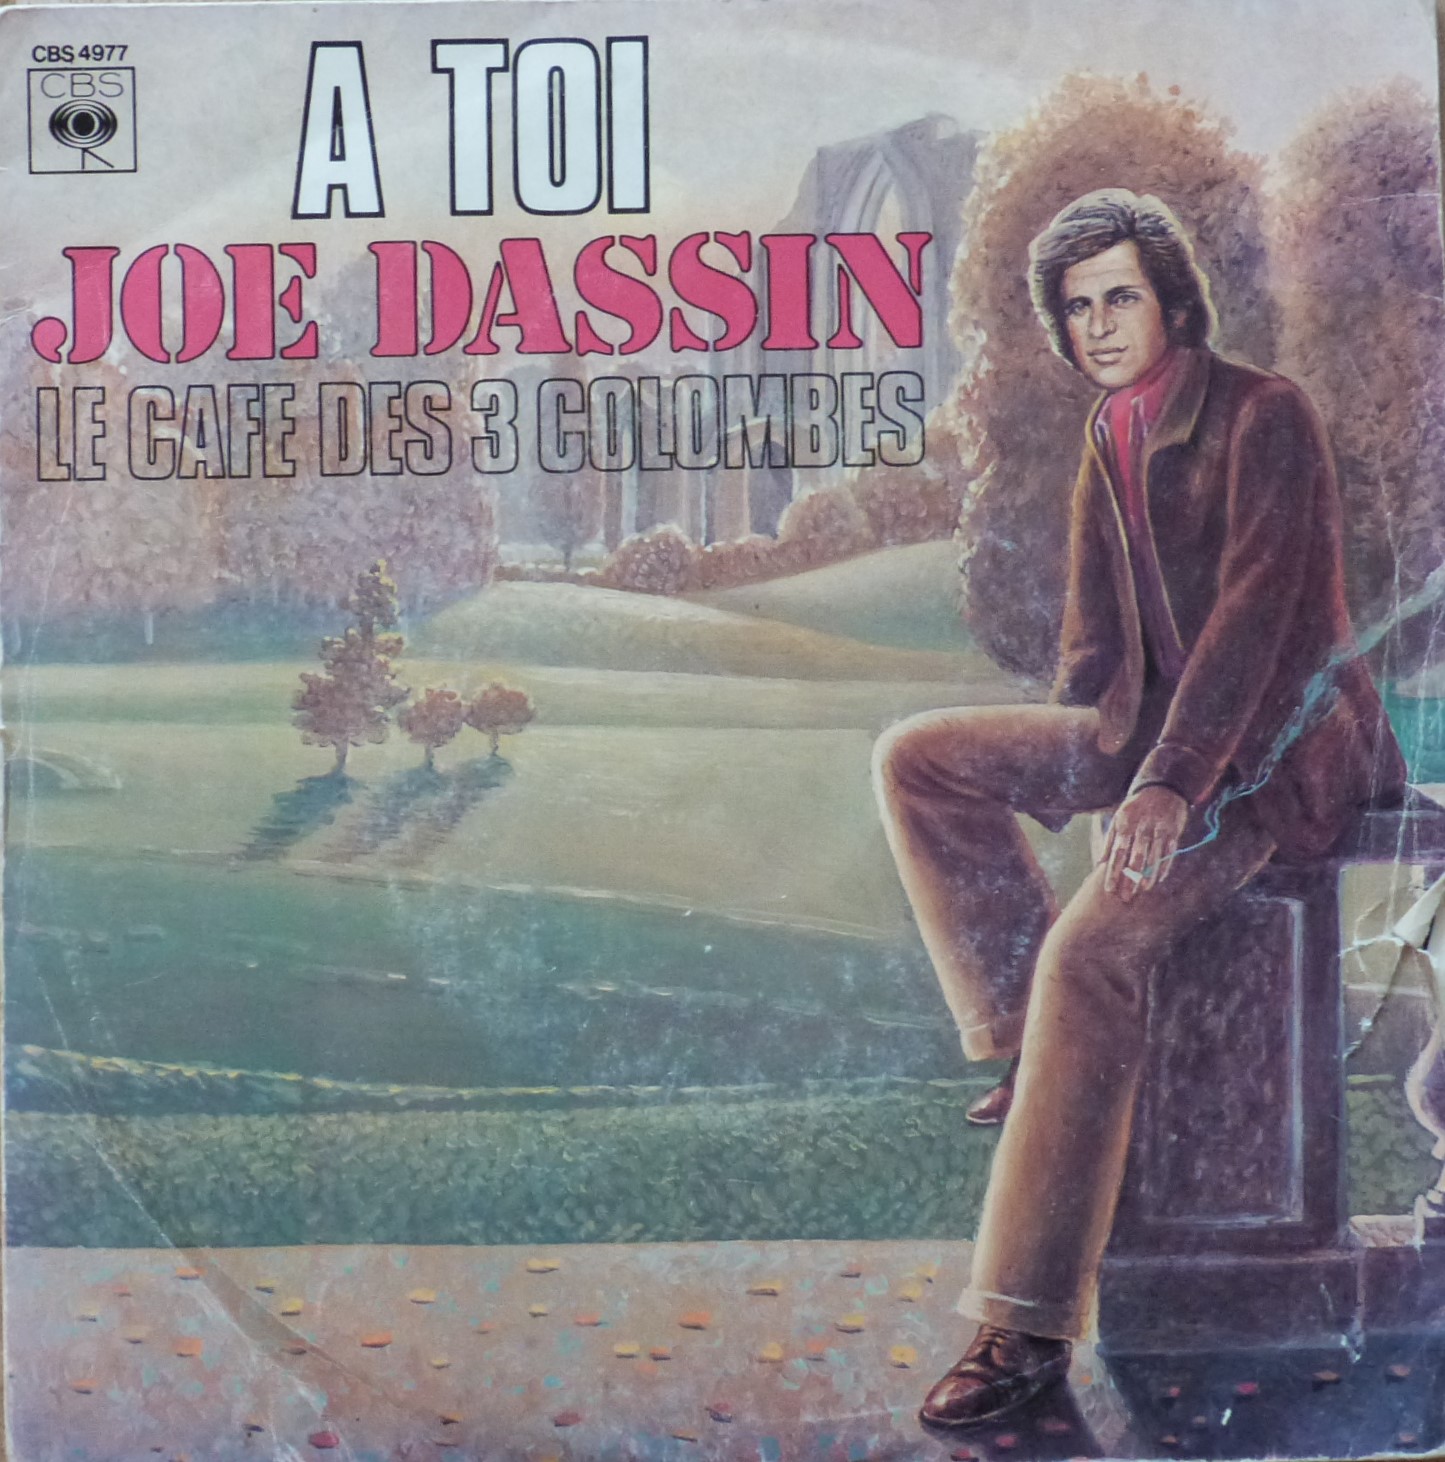 Joe Dassin, A toi